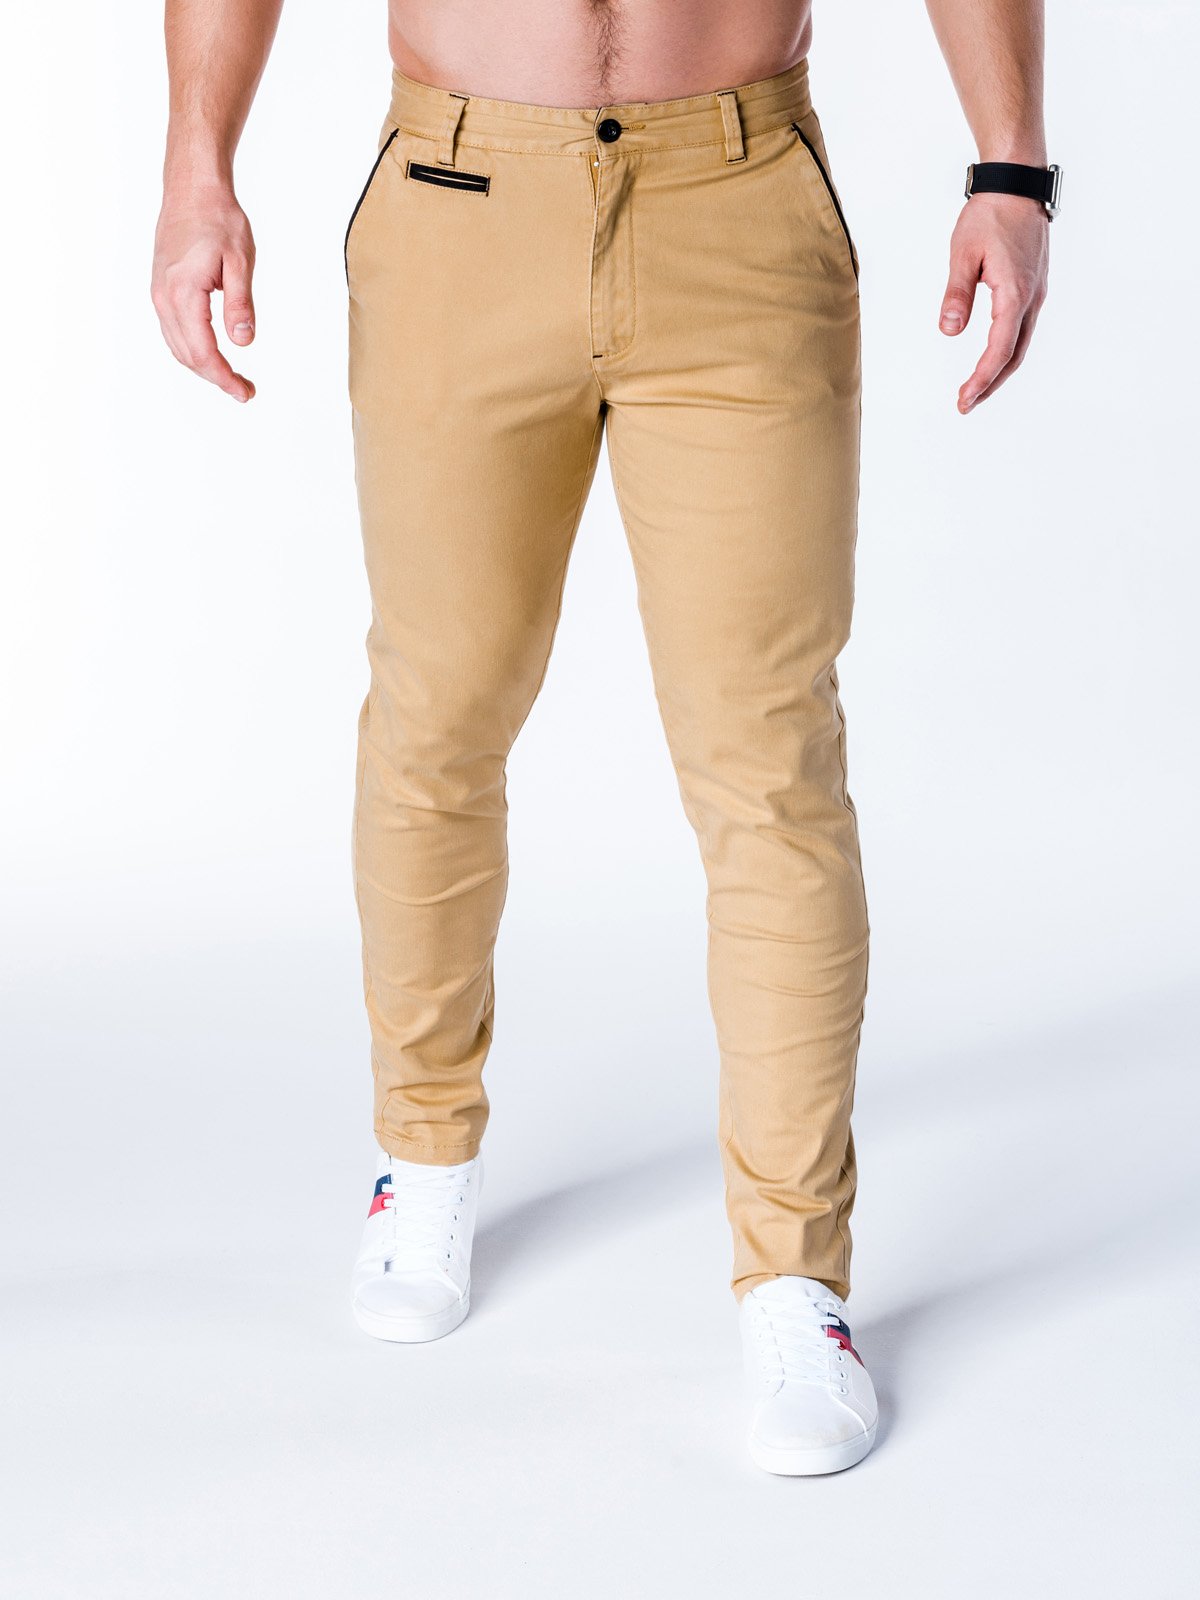 Men's pants chinos P646 - beige | MODONE wholesale - Clothing For Men